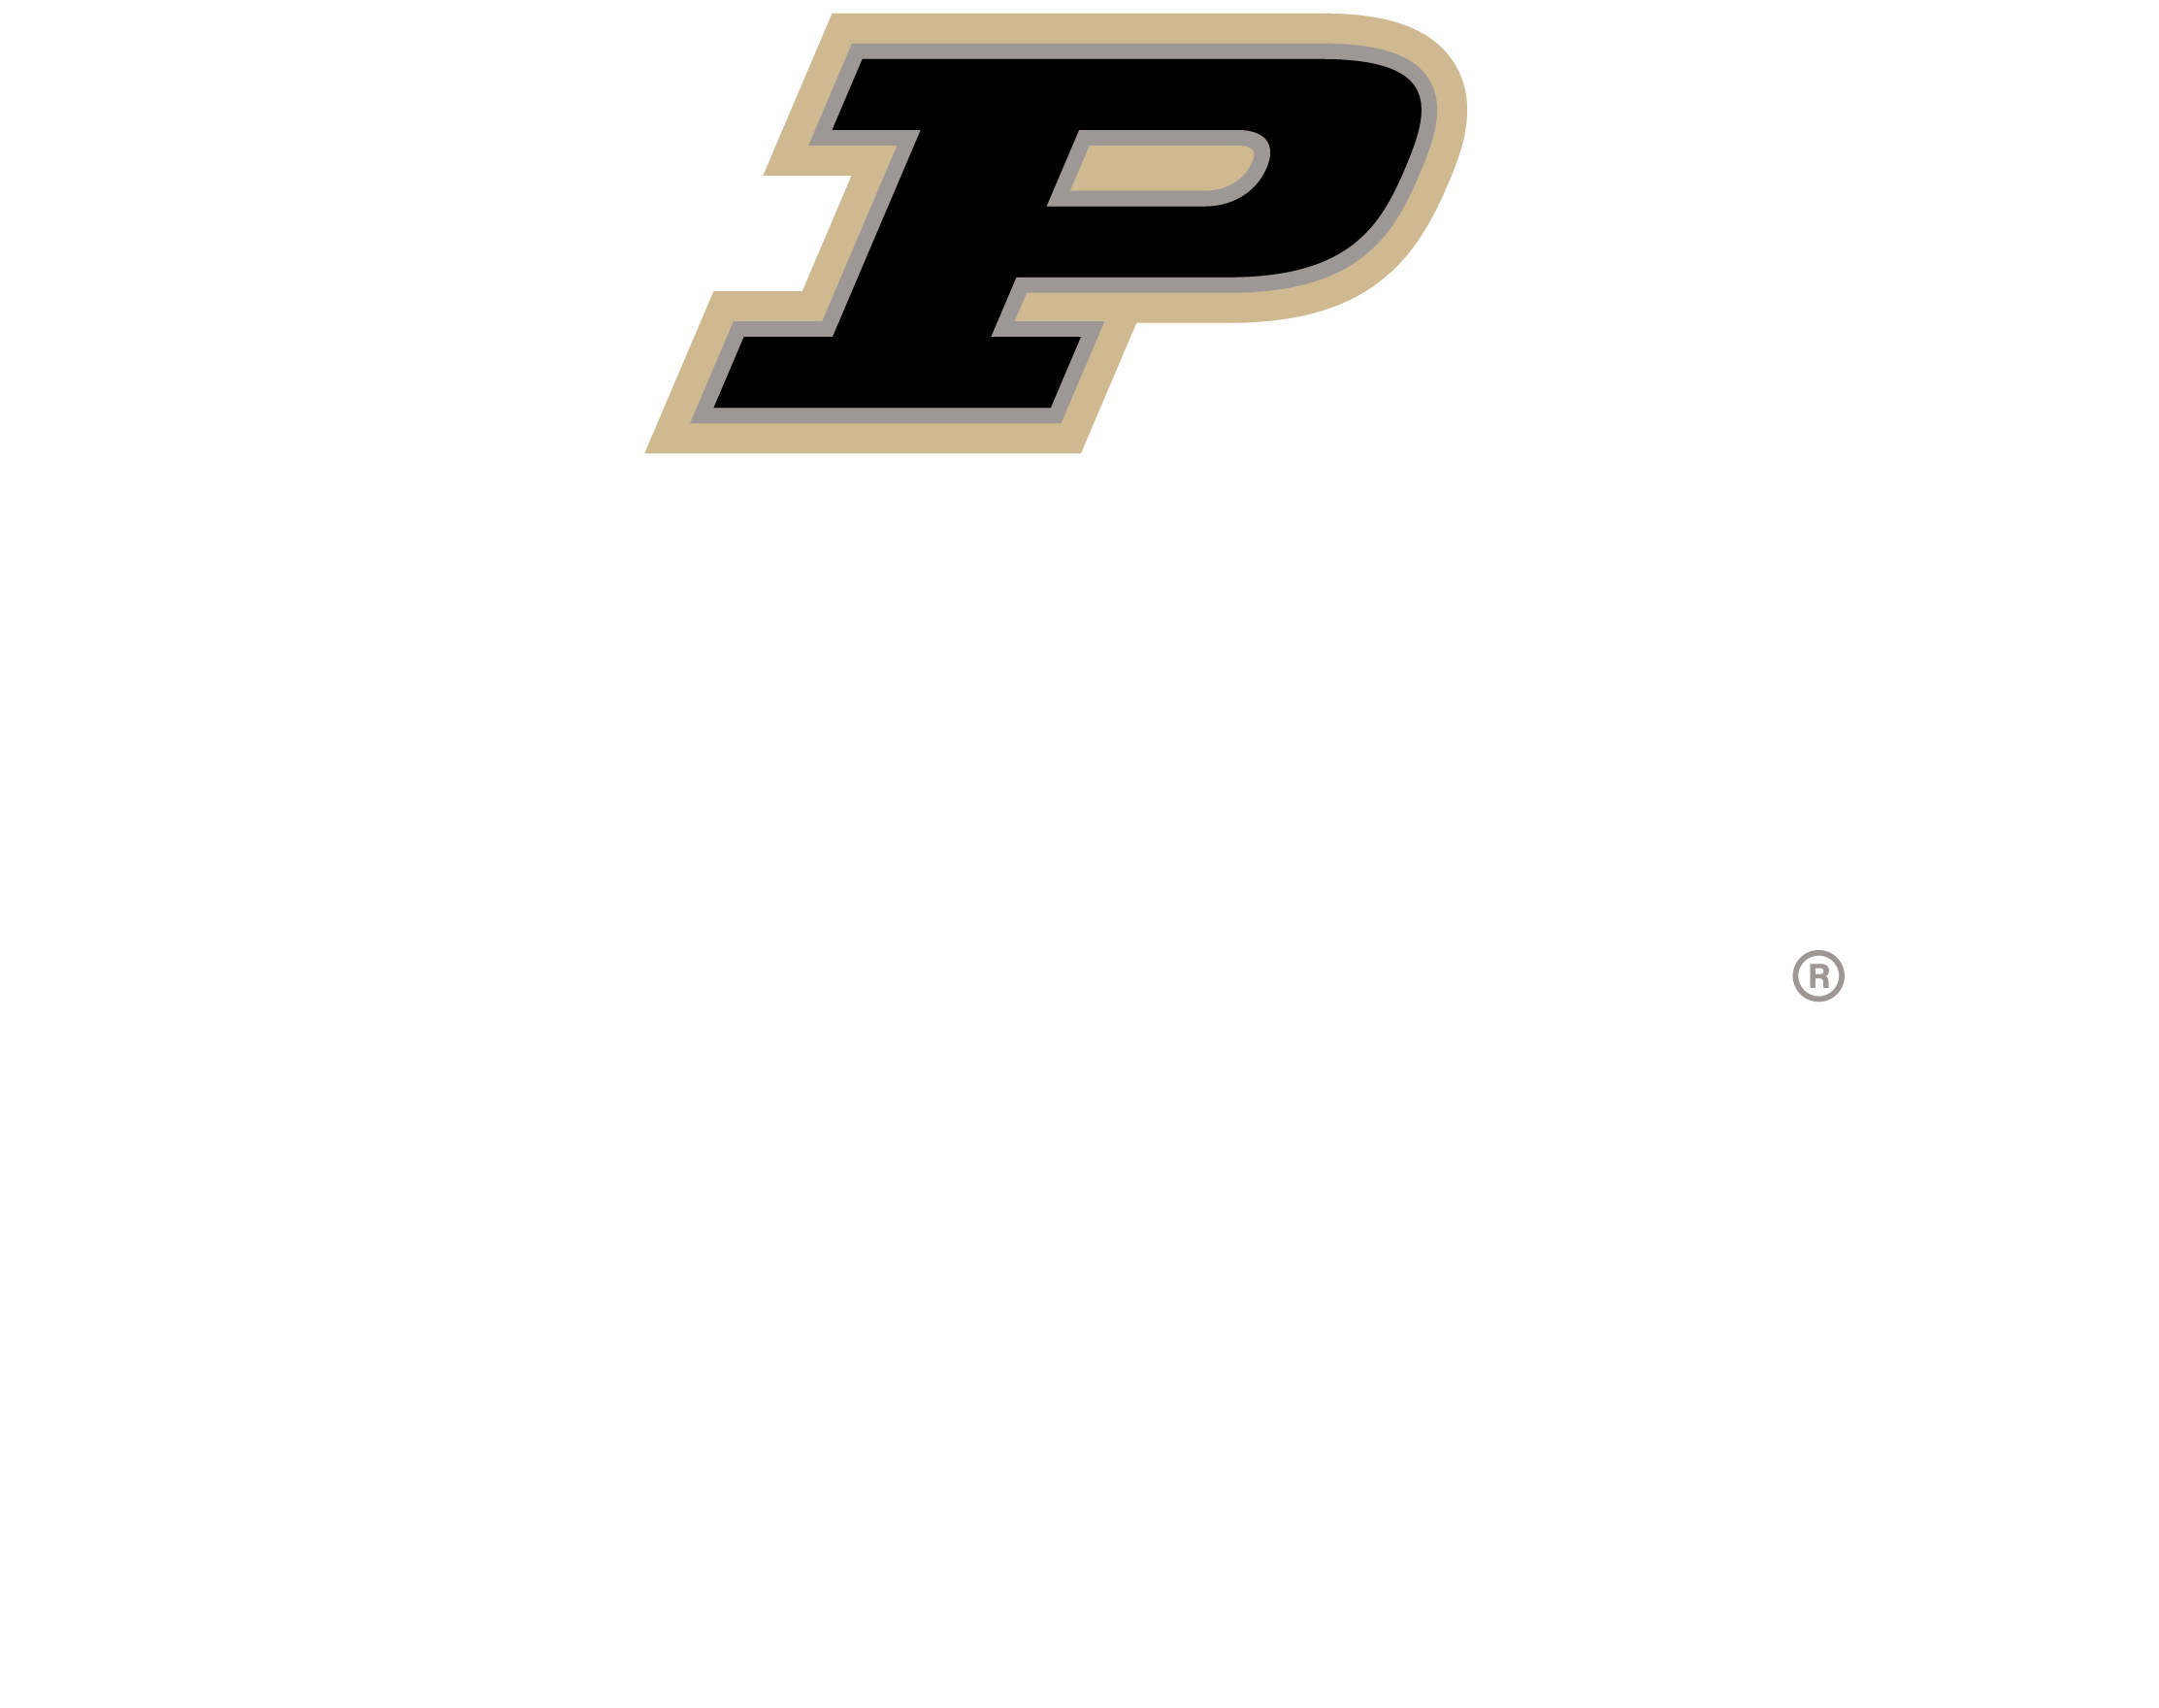 Purdue University College of Engineering logo